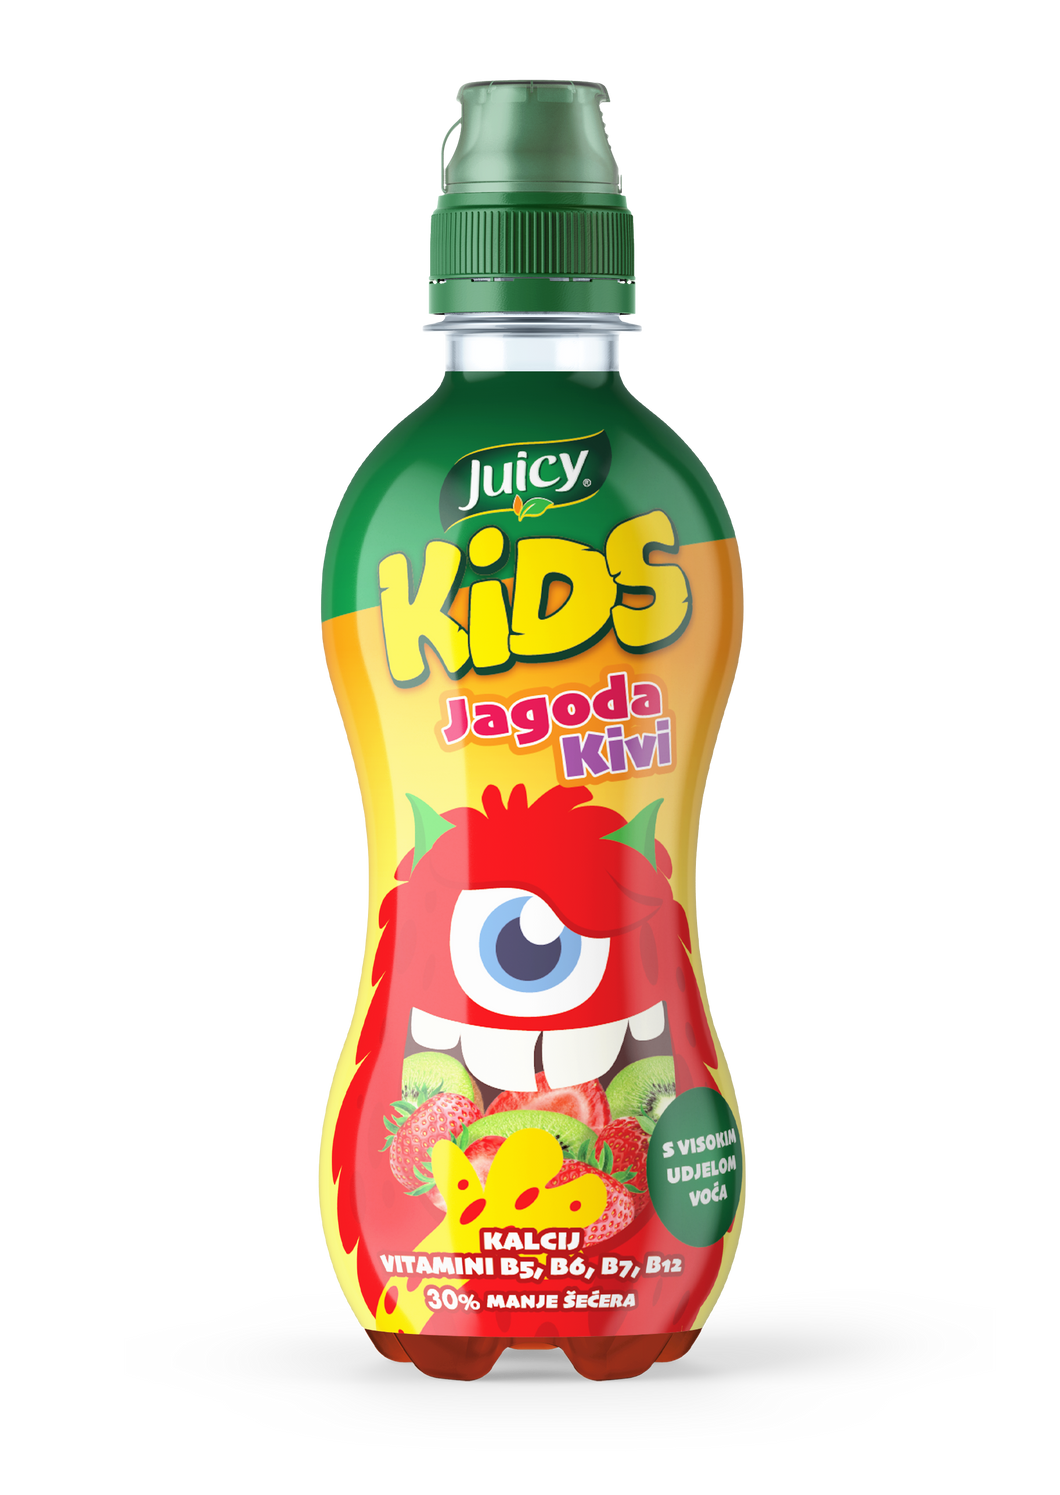 Juicy Kids jagoda kivi 0.33l 1/6